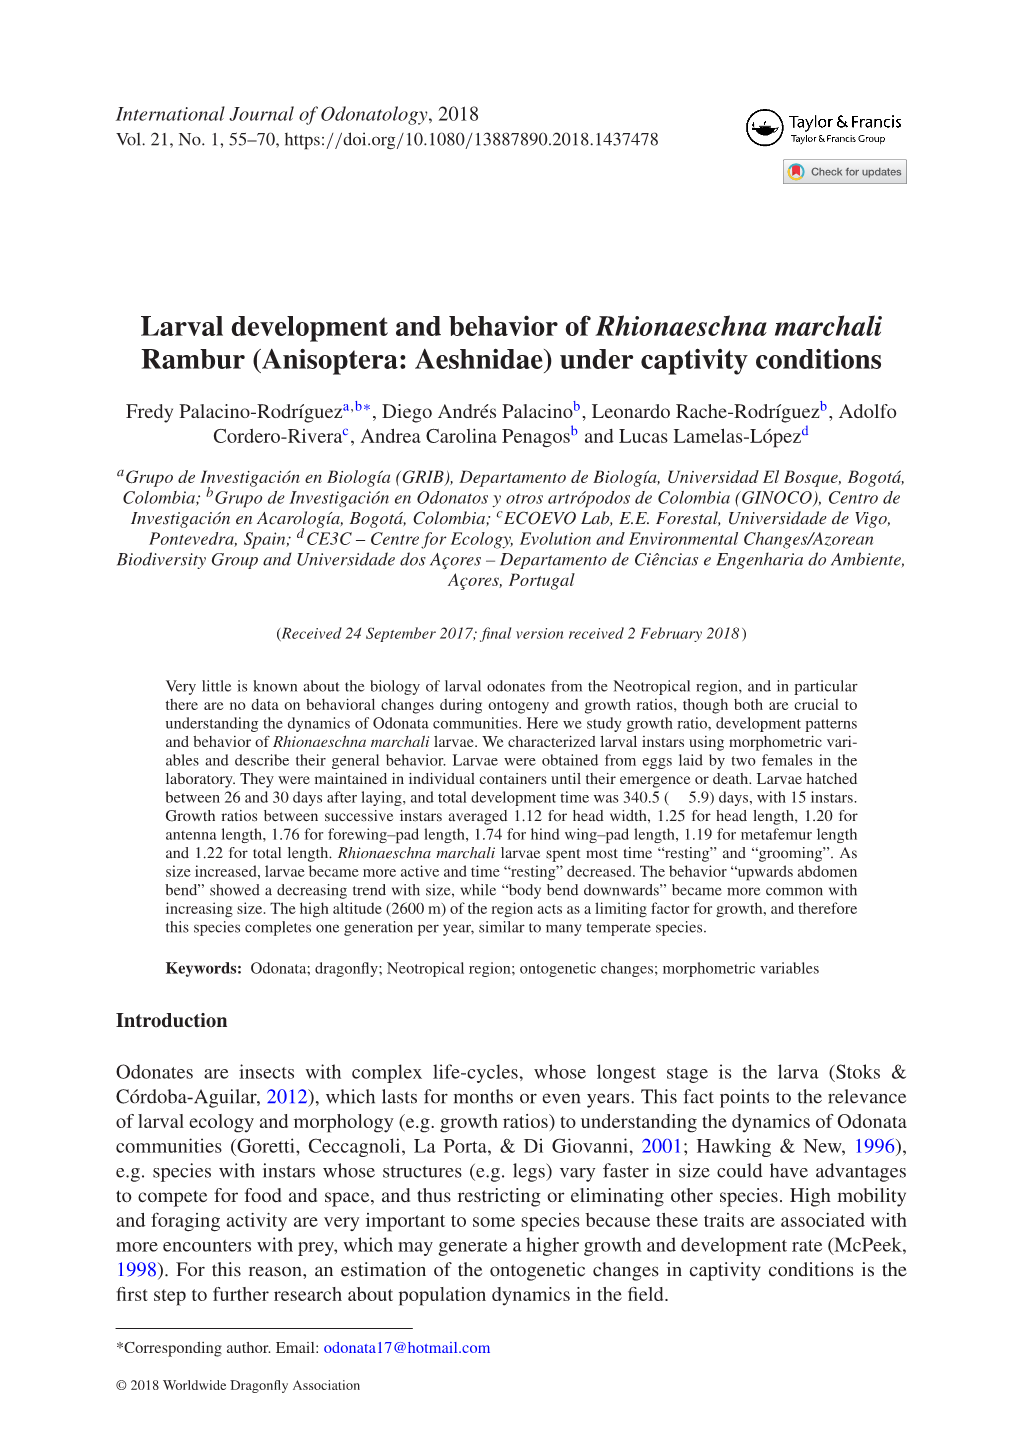 Larval Development and Behavior of Rhionaeschna Marchali Rambur (Anisoptera: Aeshnidae) Under Captivity Conditions